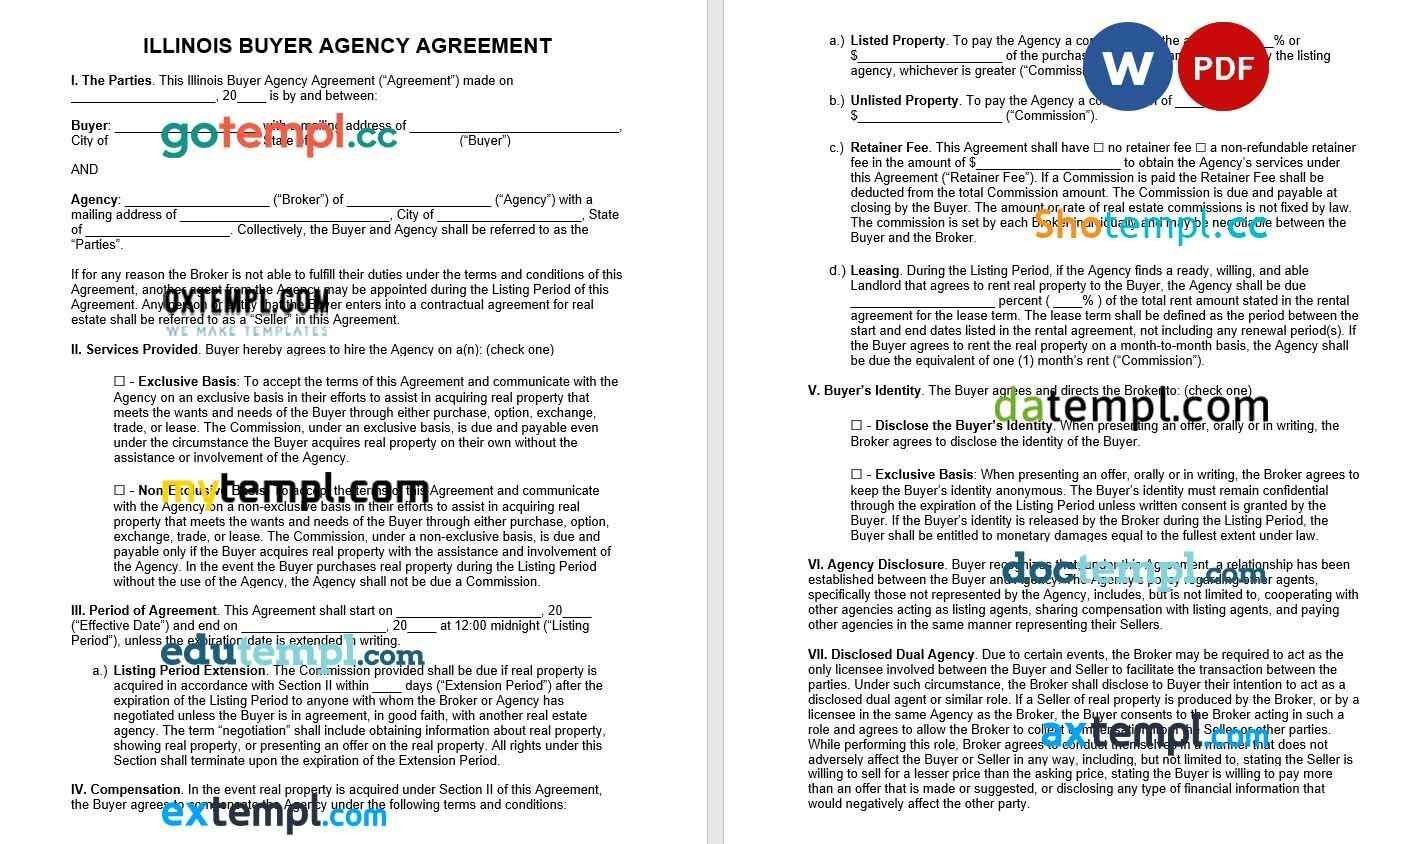 Illinois Buyer Agency Agreement Word example, completely editable